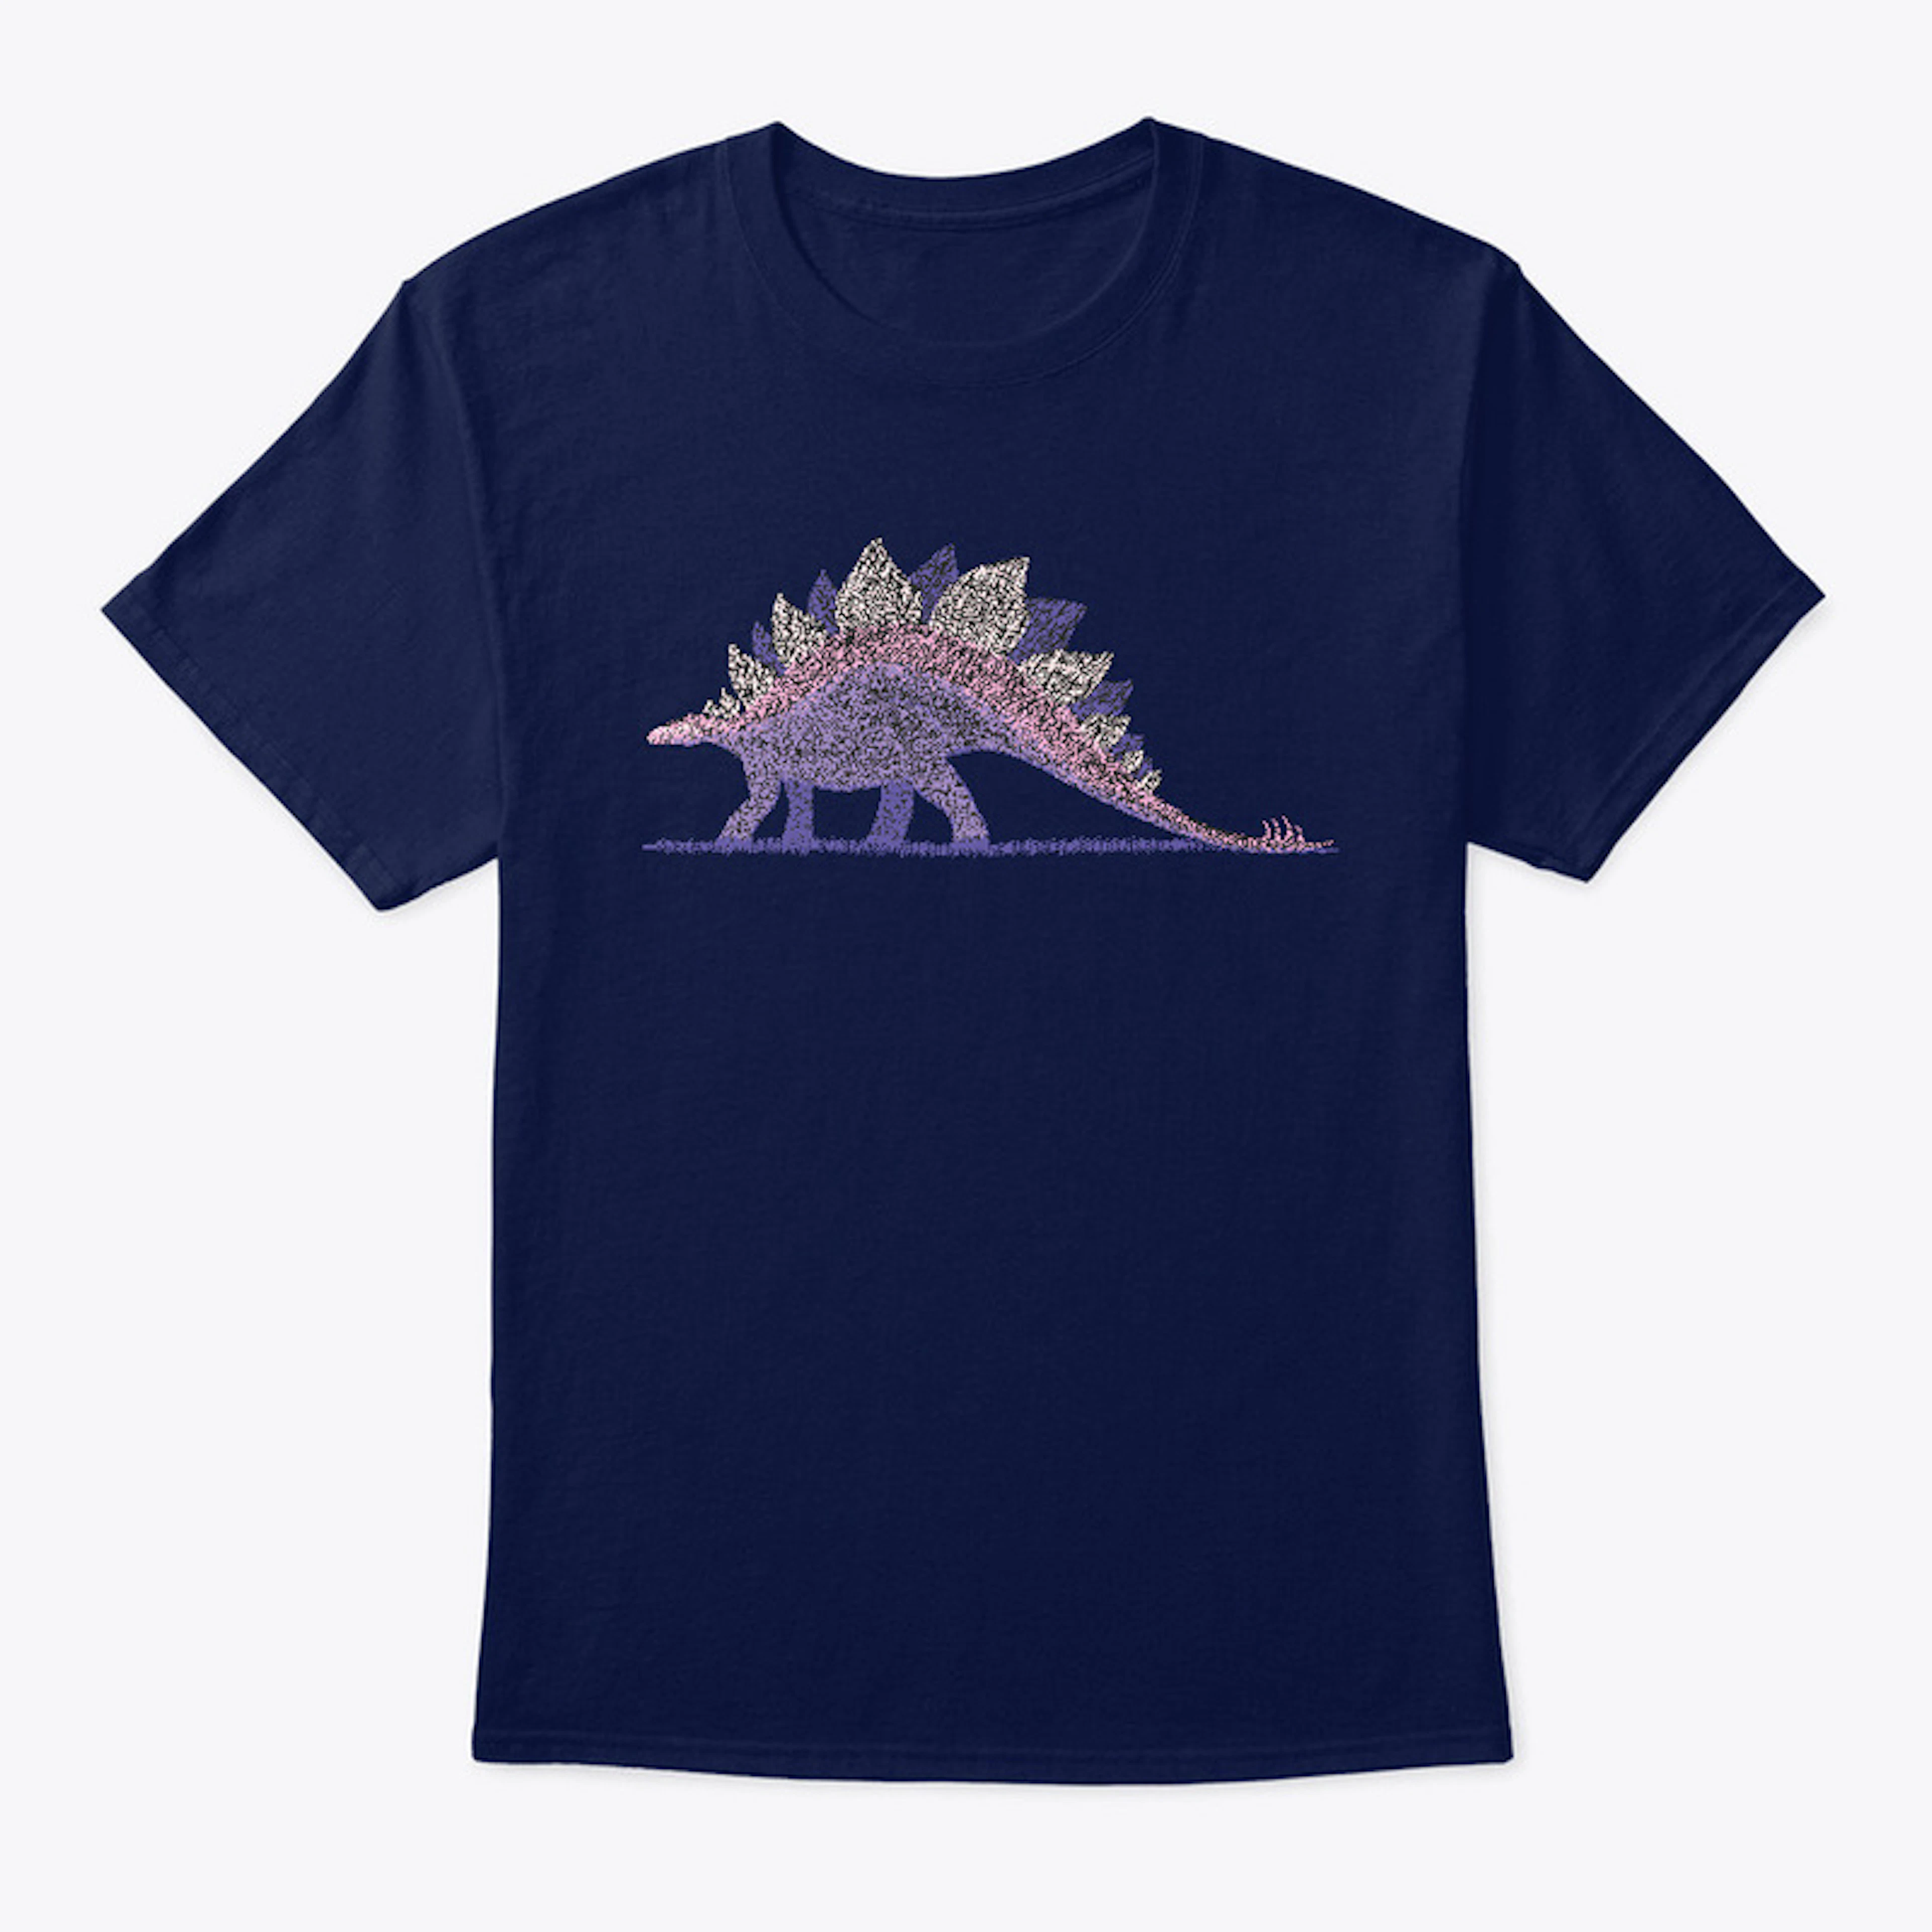 Stegosaurus by dinomodo